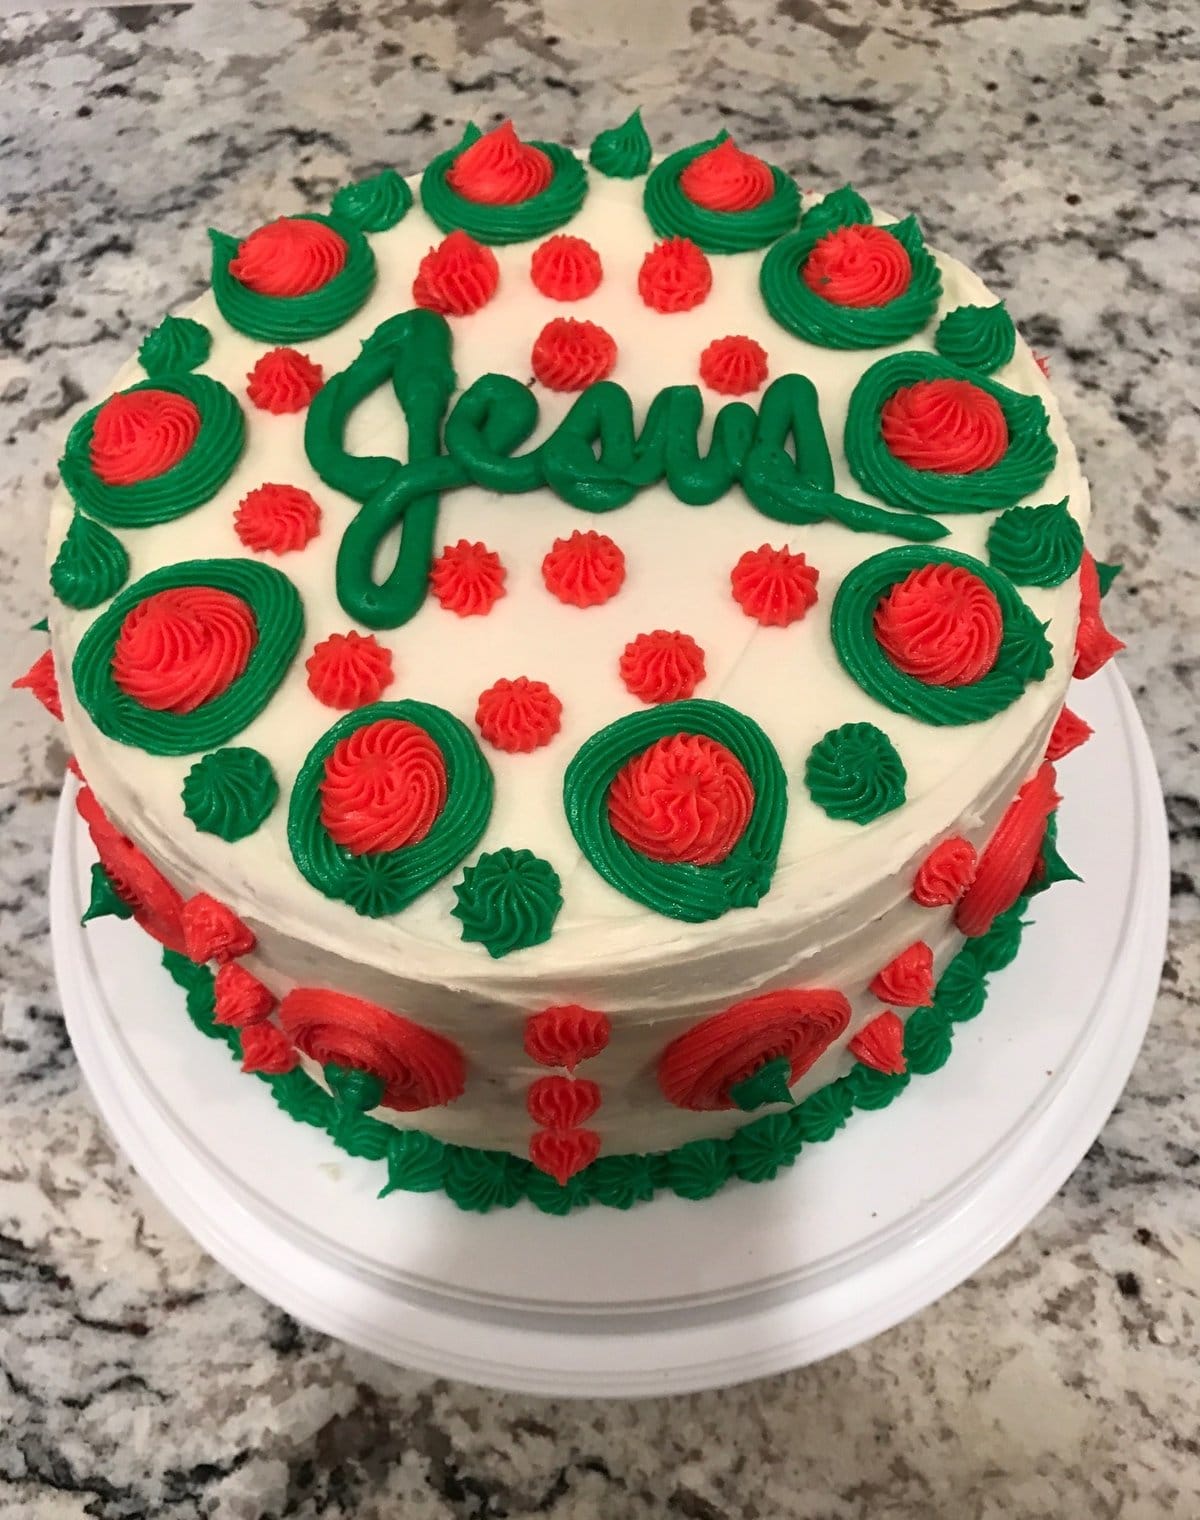 decorated birthday cake for jesus